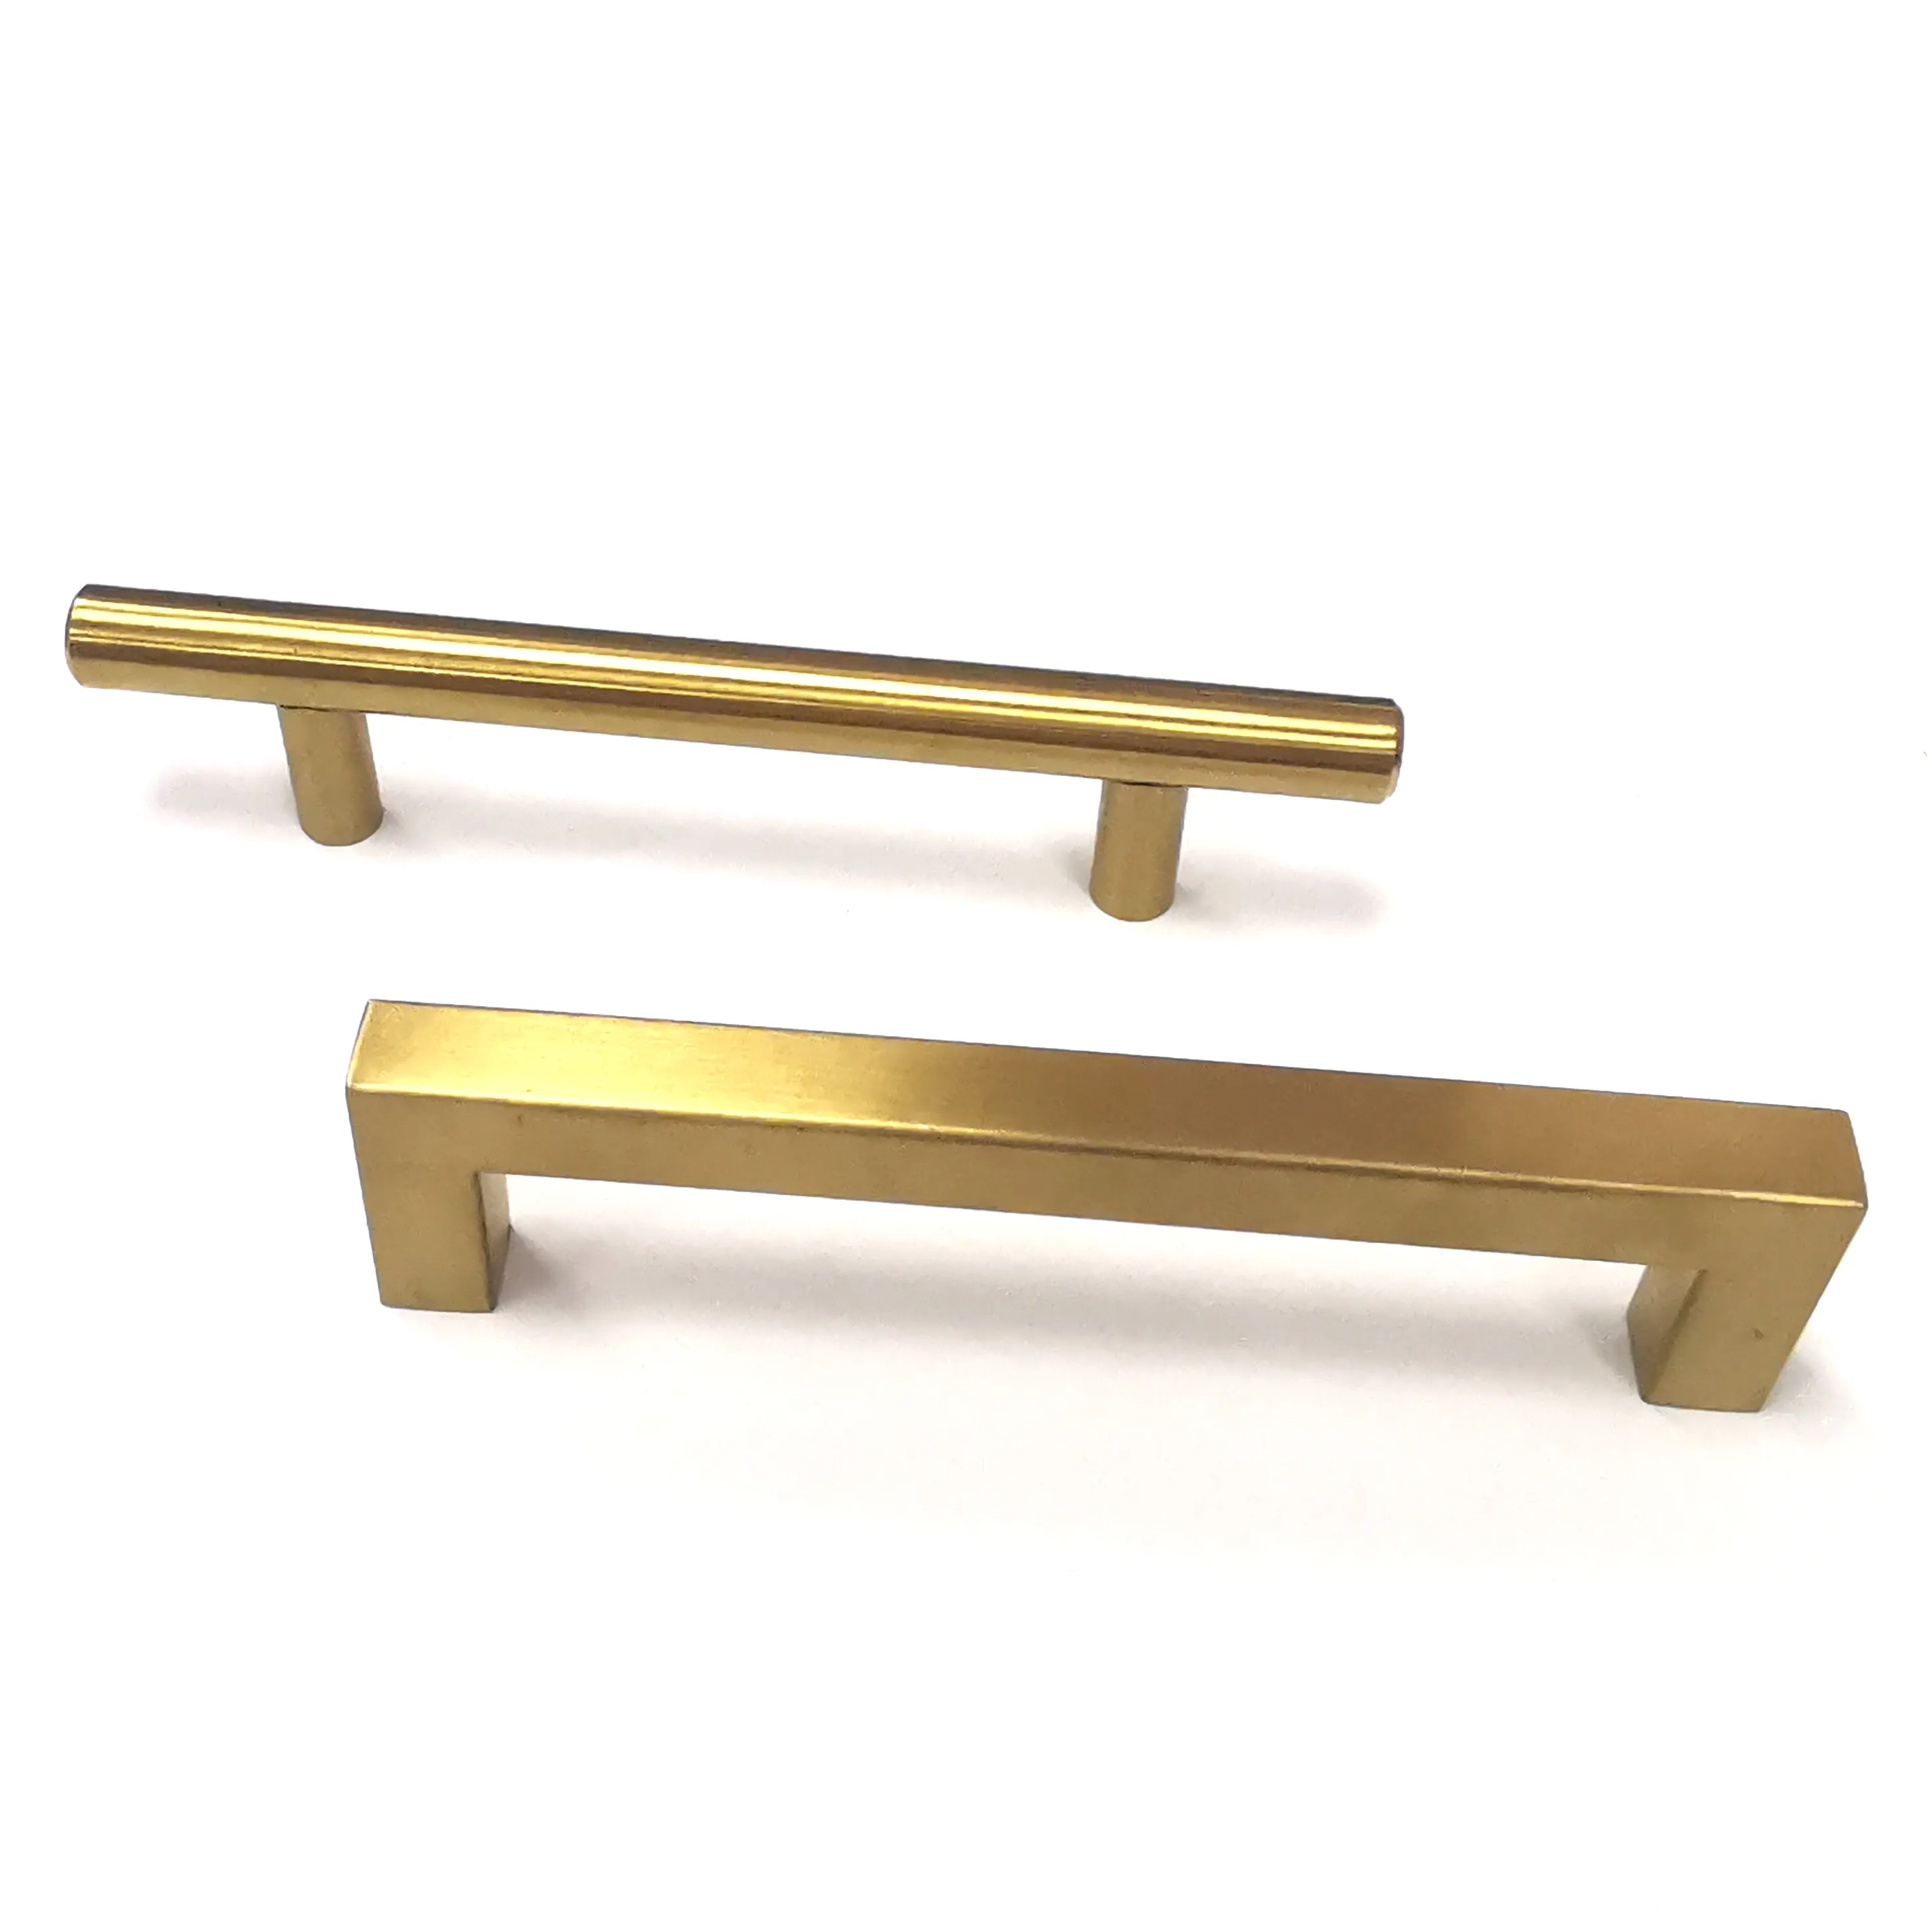 Gold Square Pull Handle Cabinet Door Kitchen Drawer Hardware